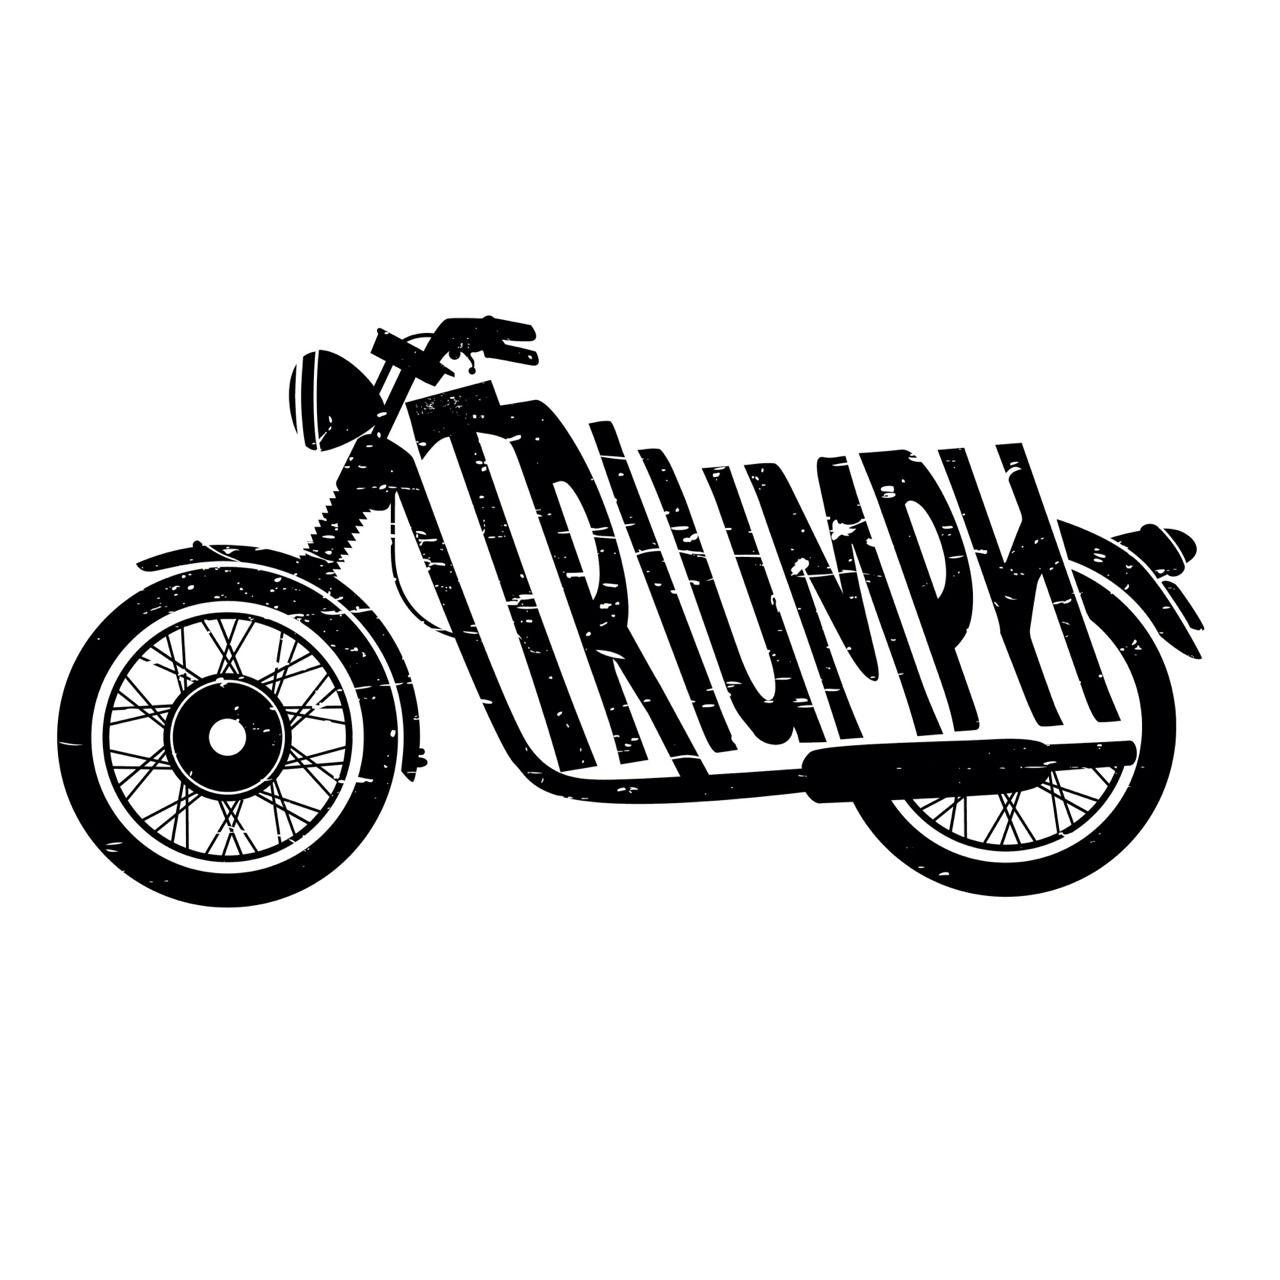 New Triumph Motorcycle Logo - Triumph Motorcycles Logo Vector Widescreen 2 HD Wallpaper